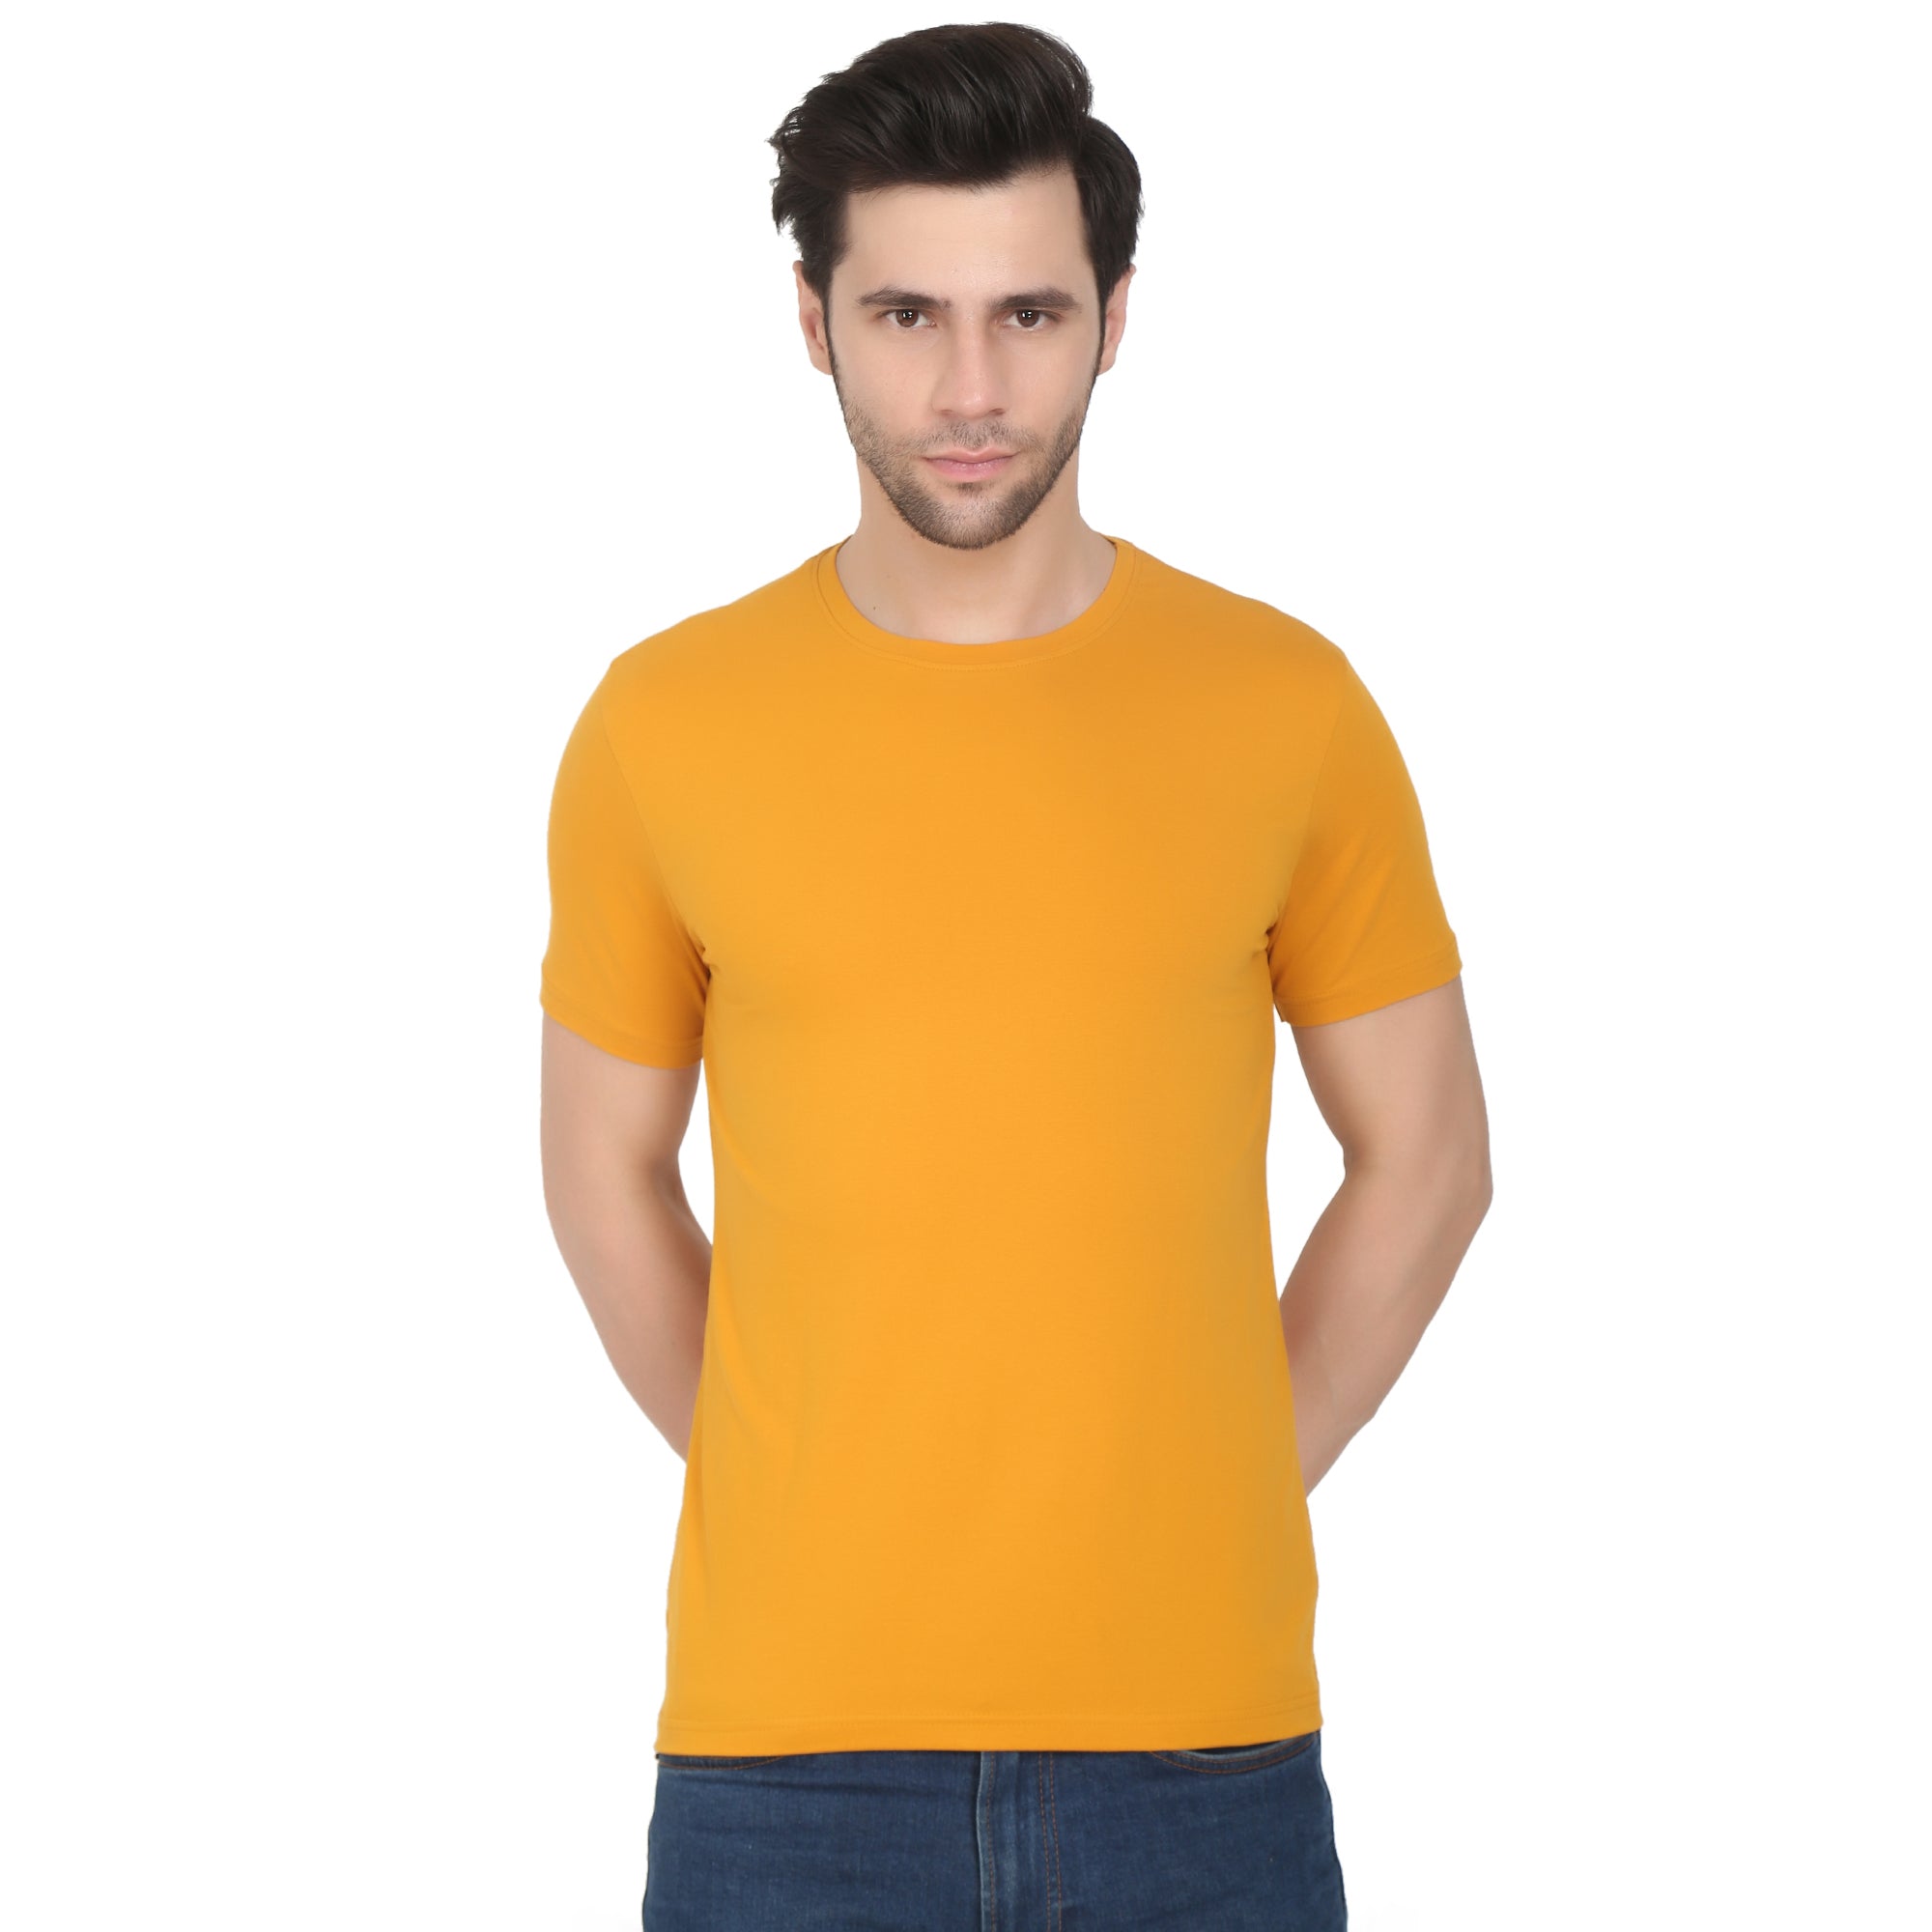 Men Four Way Stretch Cotton Plain T-shirt - Mustard Yellow Colour